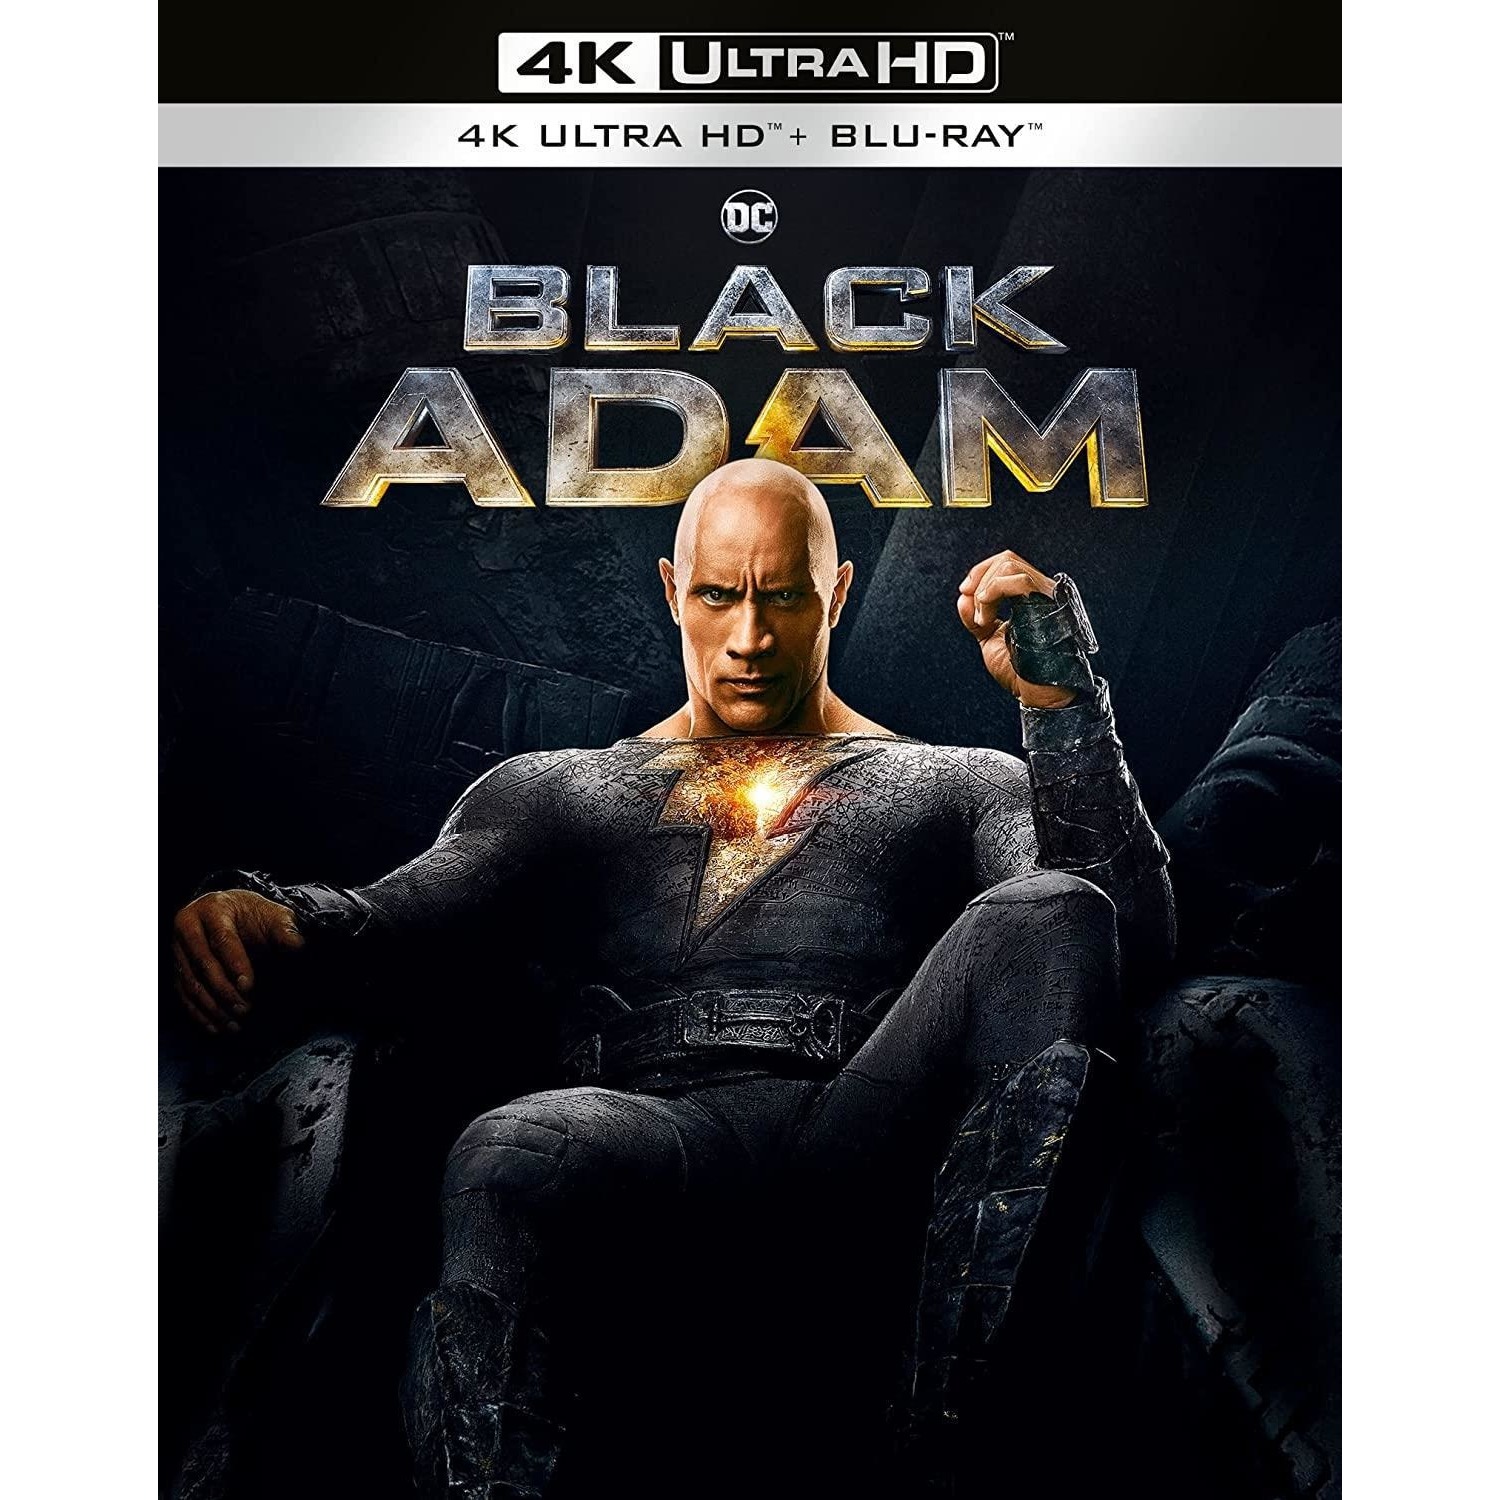 Immagine per Bluray 4K Black Adam da DIMOStore